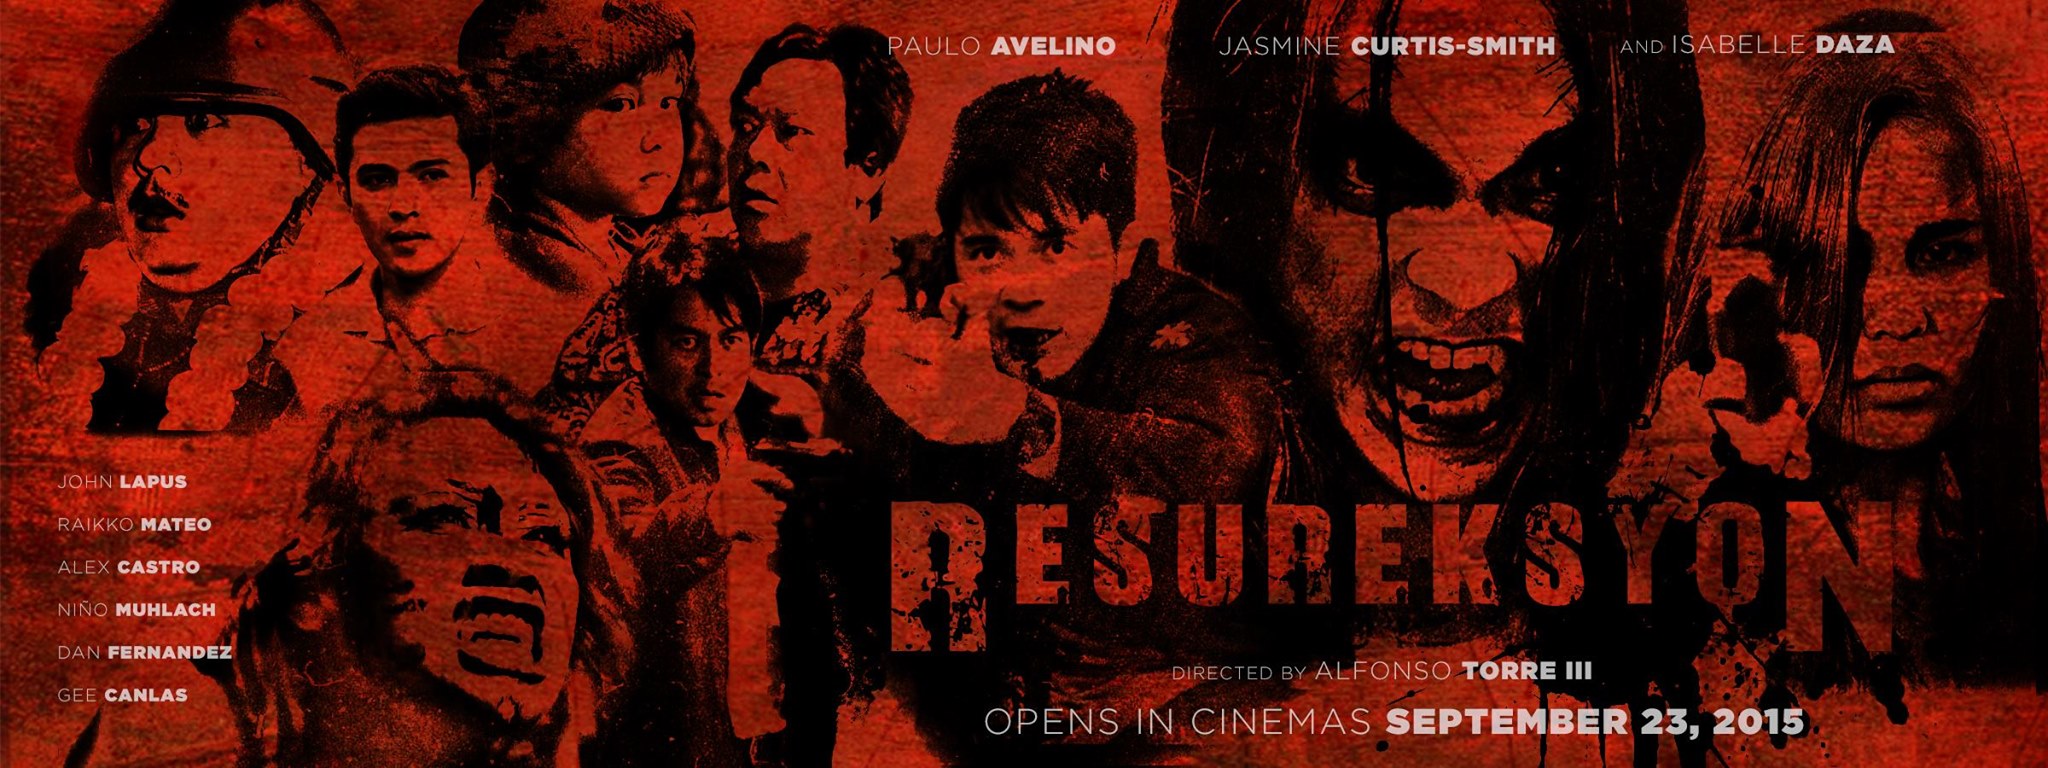 Resureksyon opens in cinemas September 23, 2015